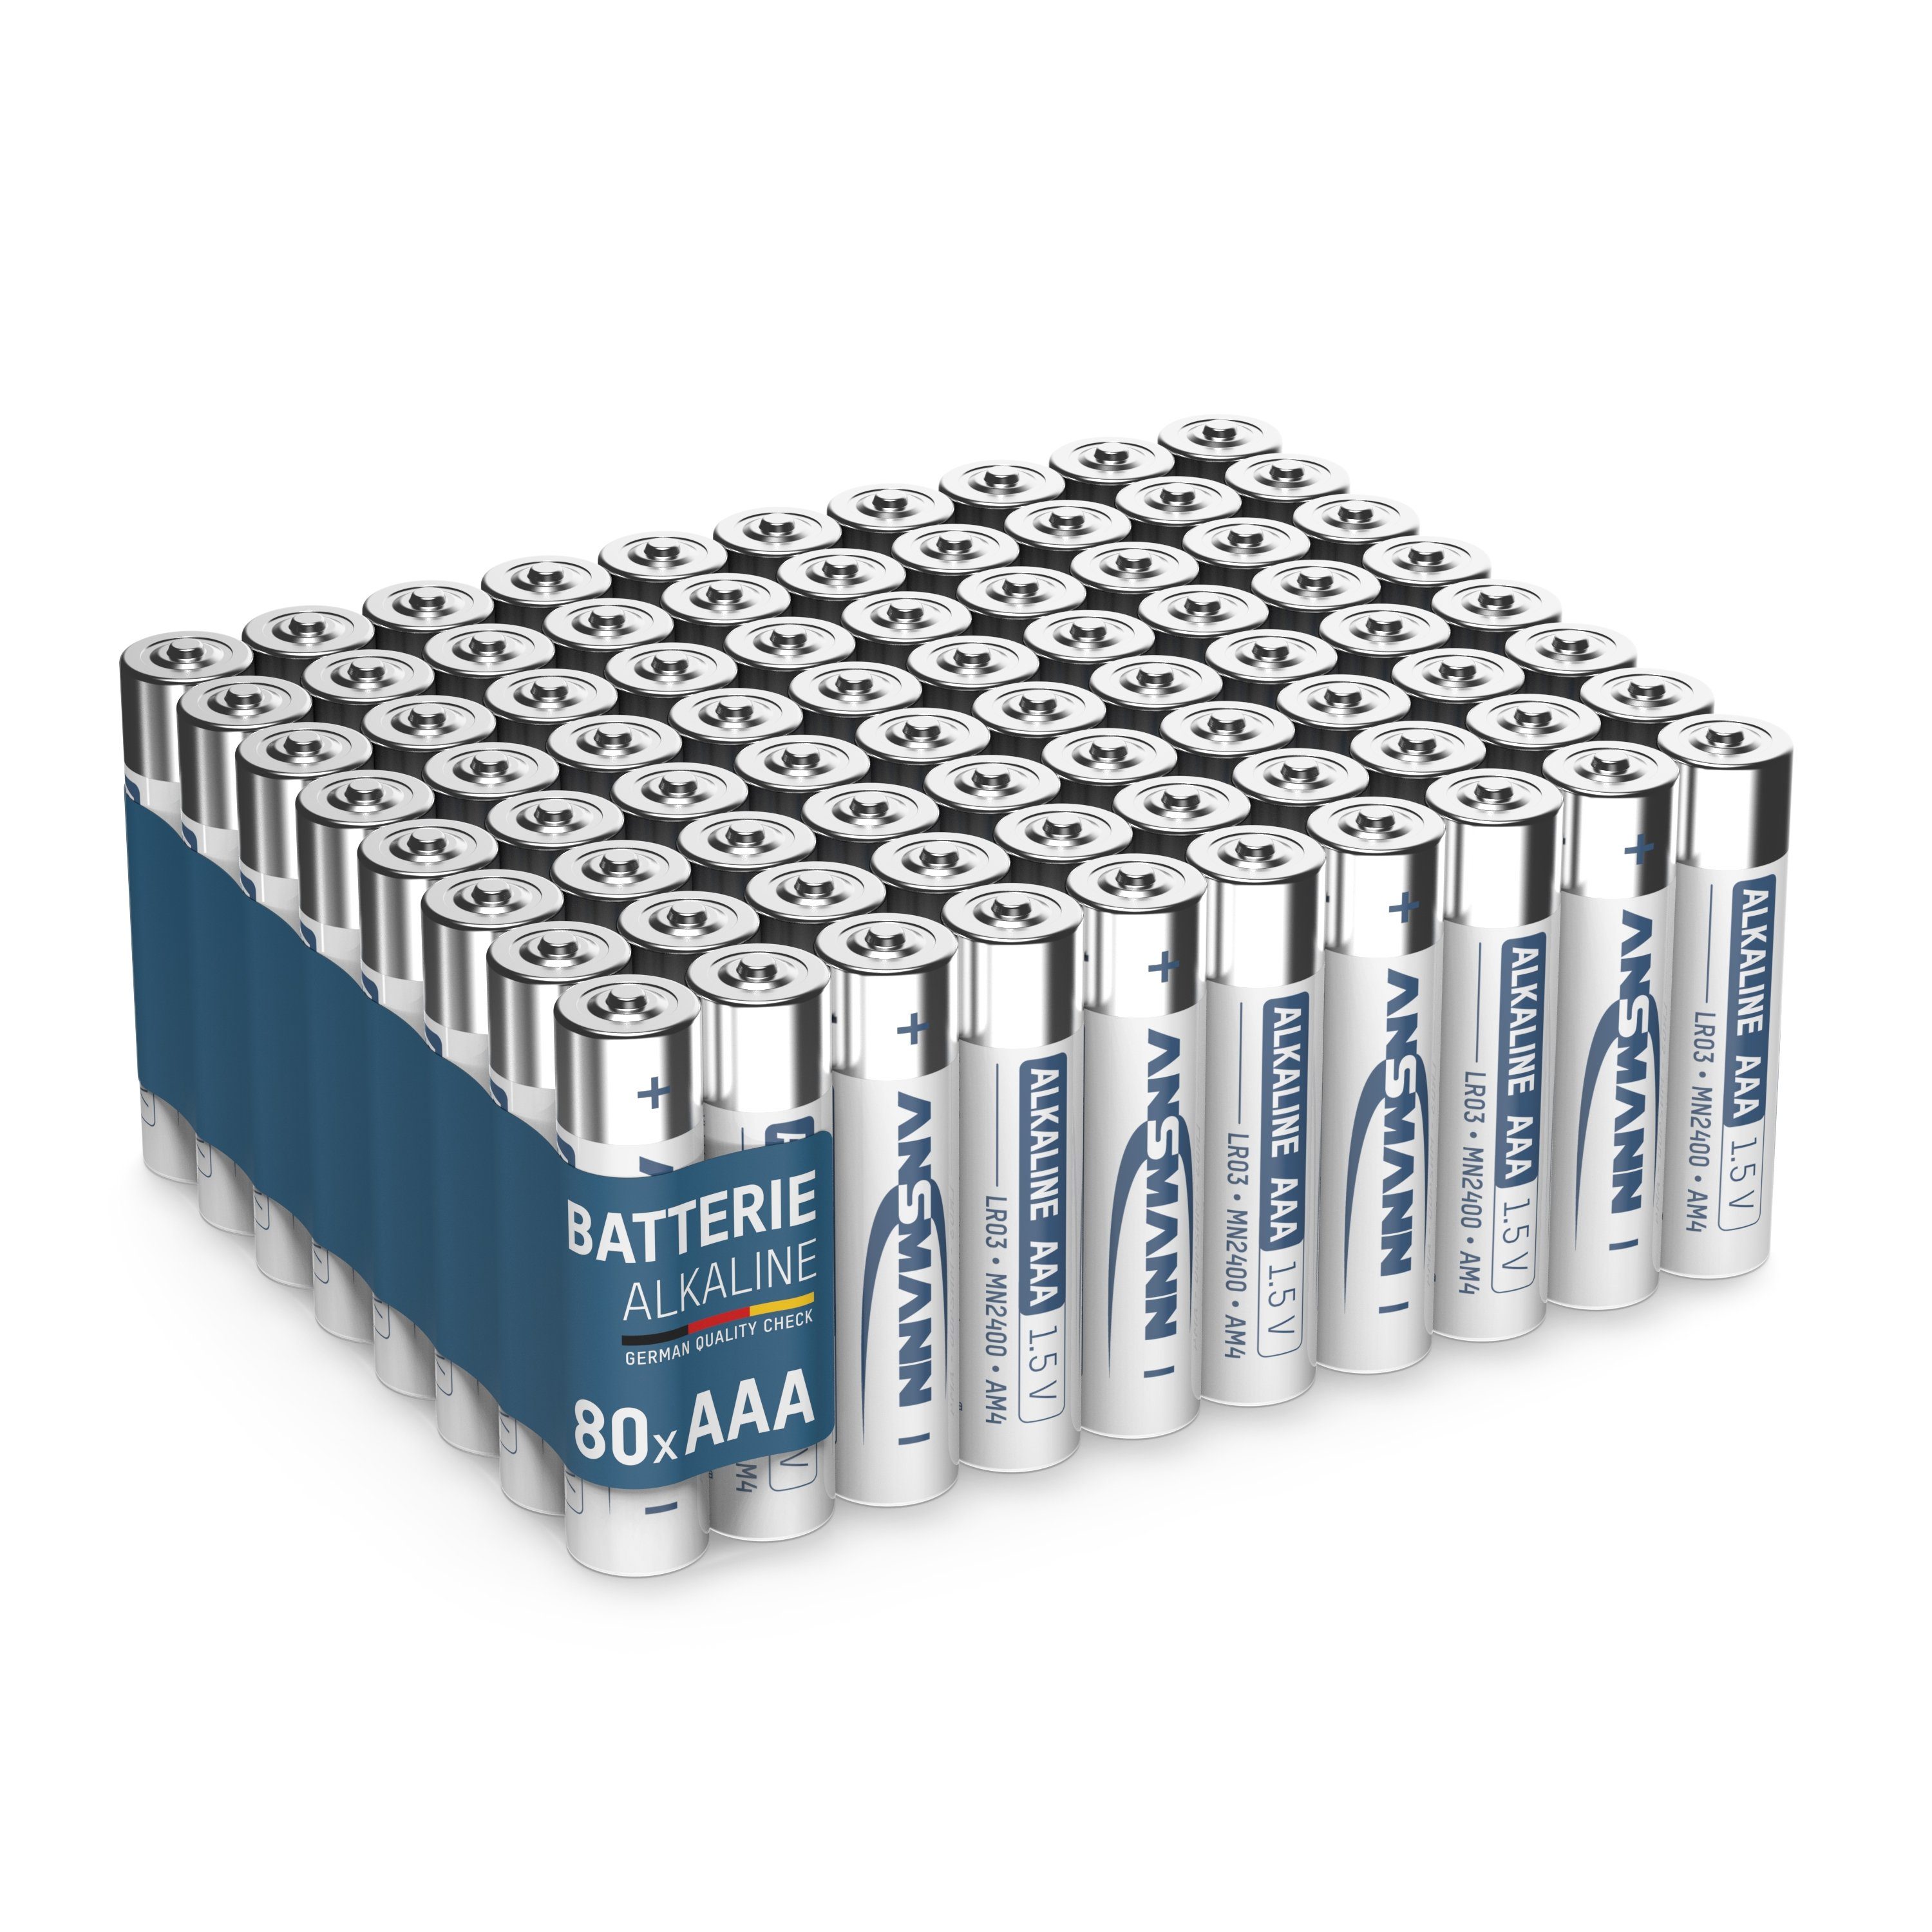 Alkaline AAA ANSMANN® Batterie Batterien Größe - Stück (80 Vorratspack) LR03